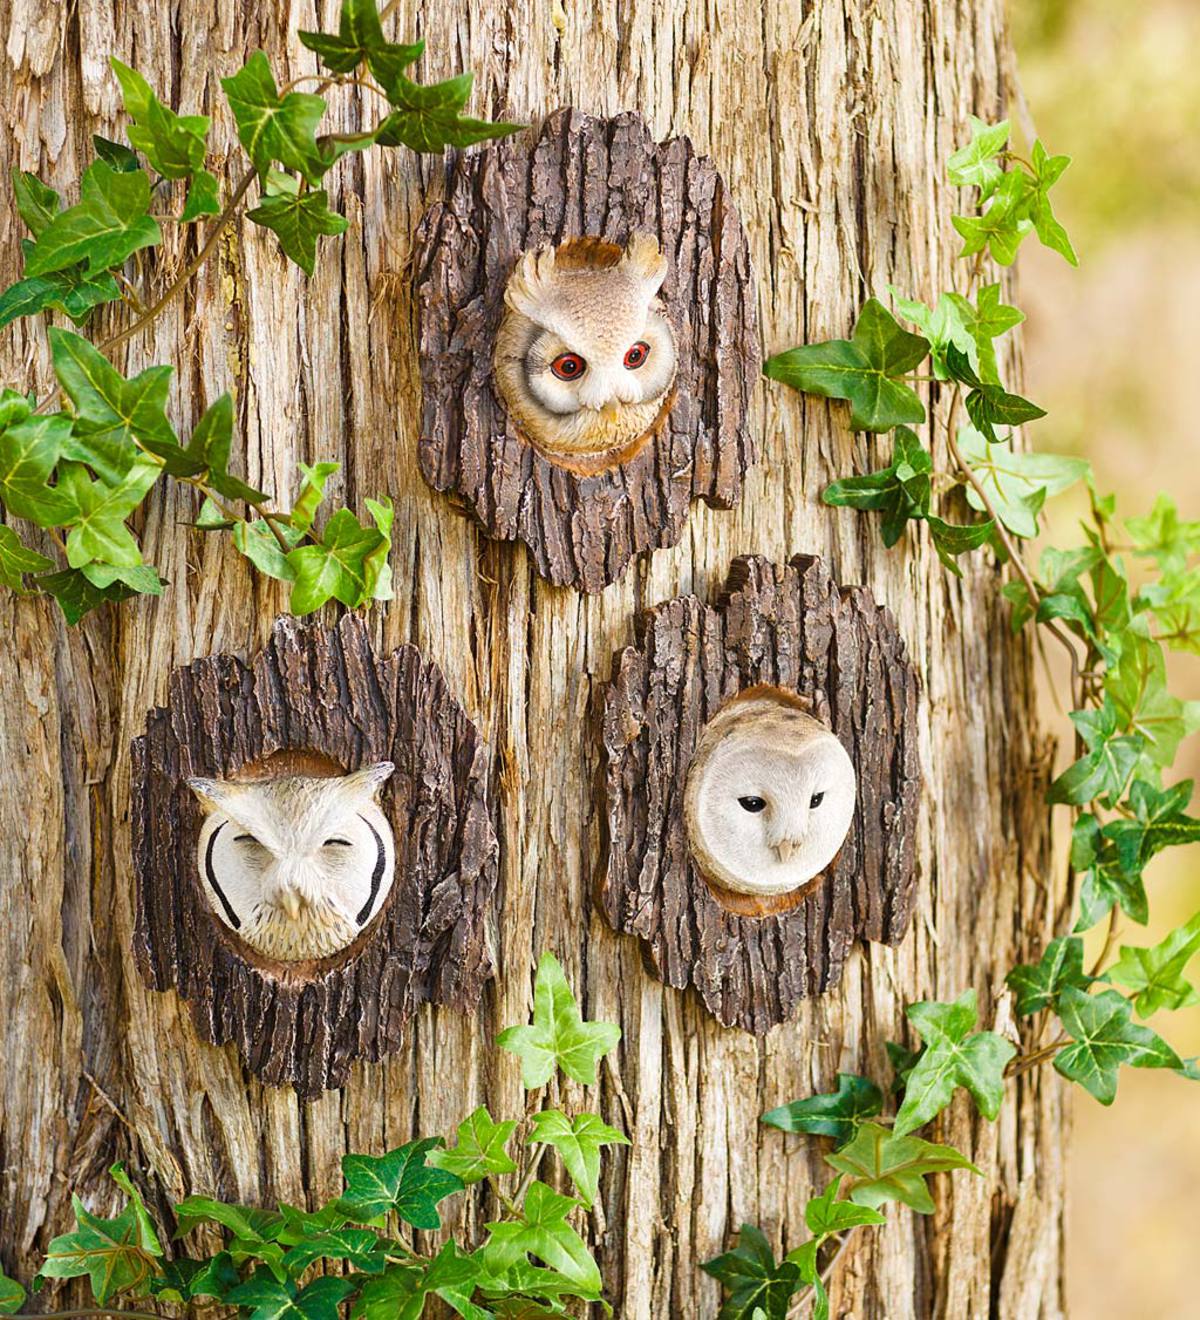 Realistic Owl Sculptures, Set of 3